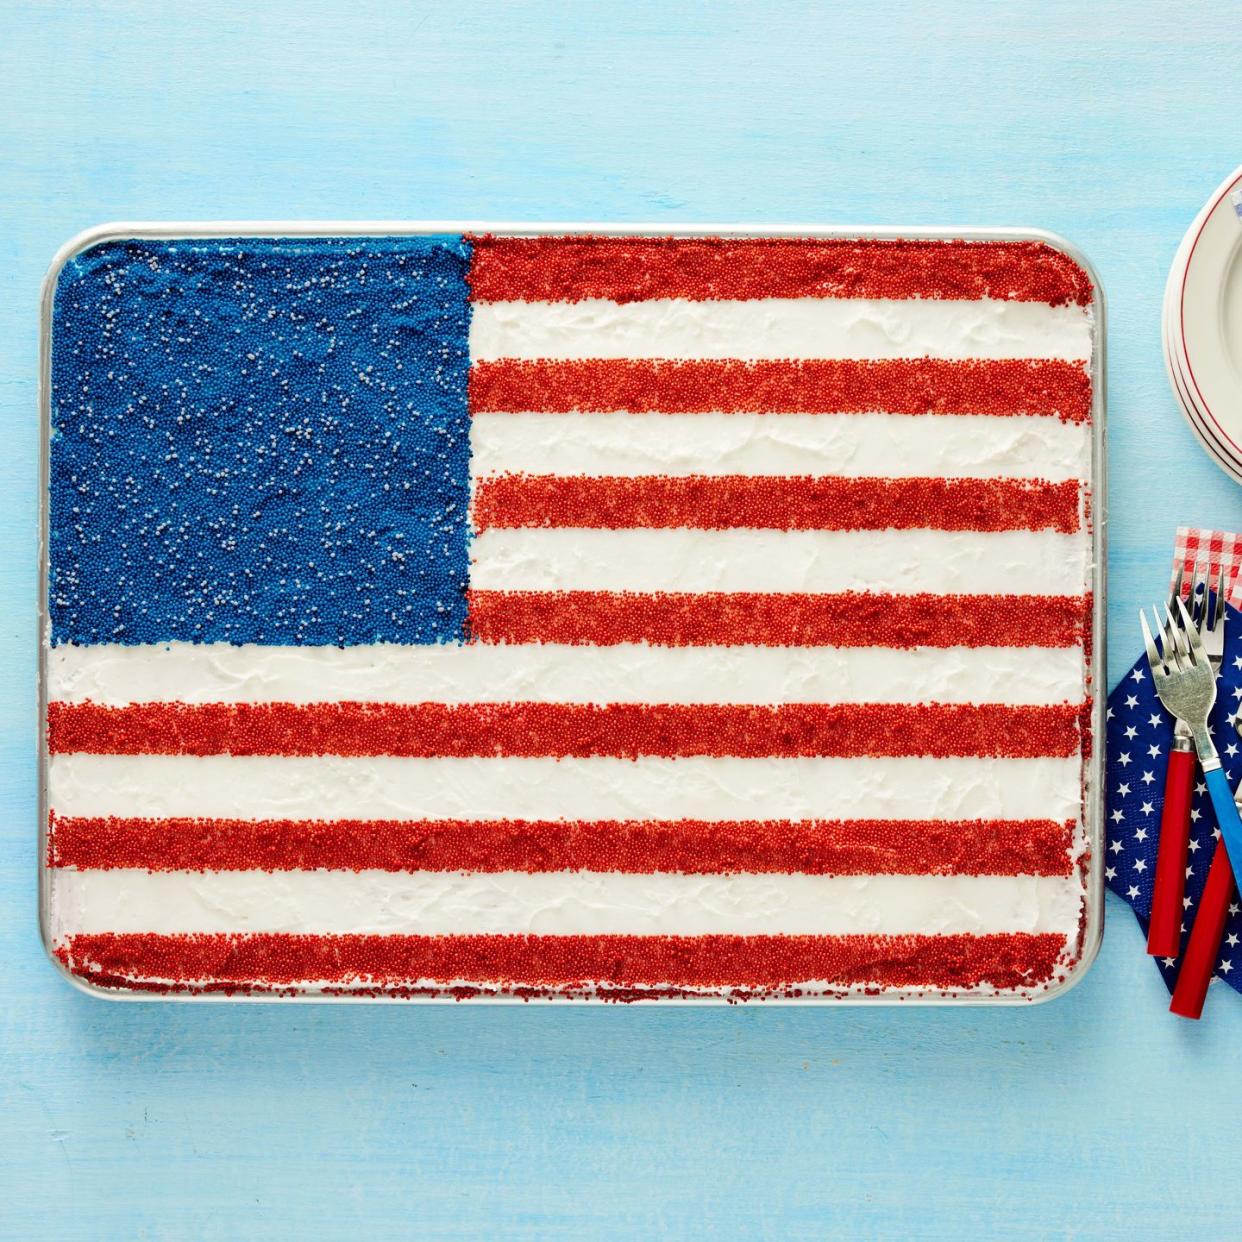 memorial day desserts american flag cake